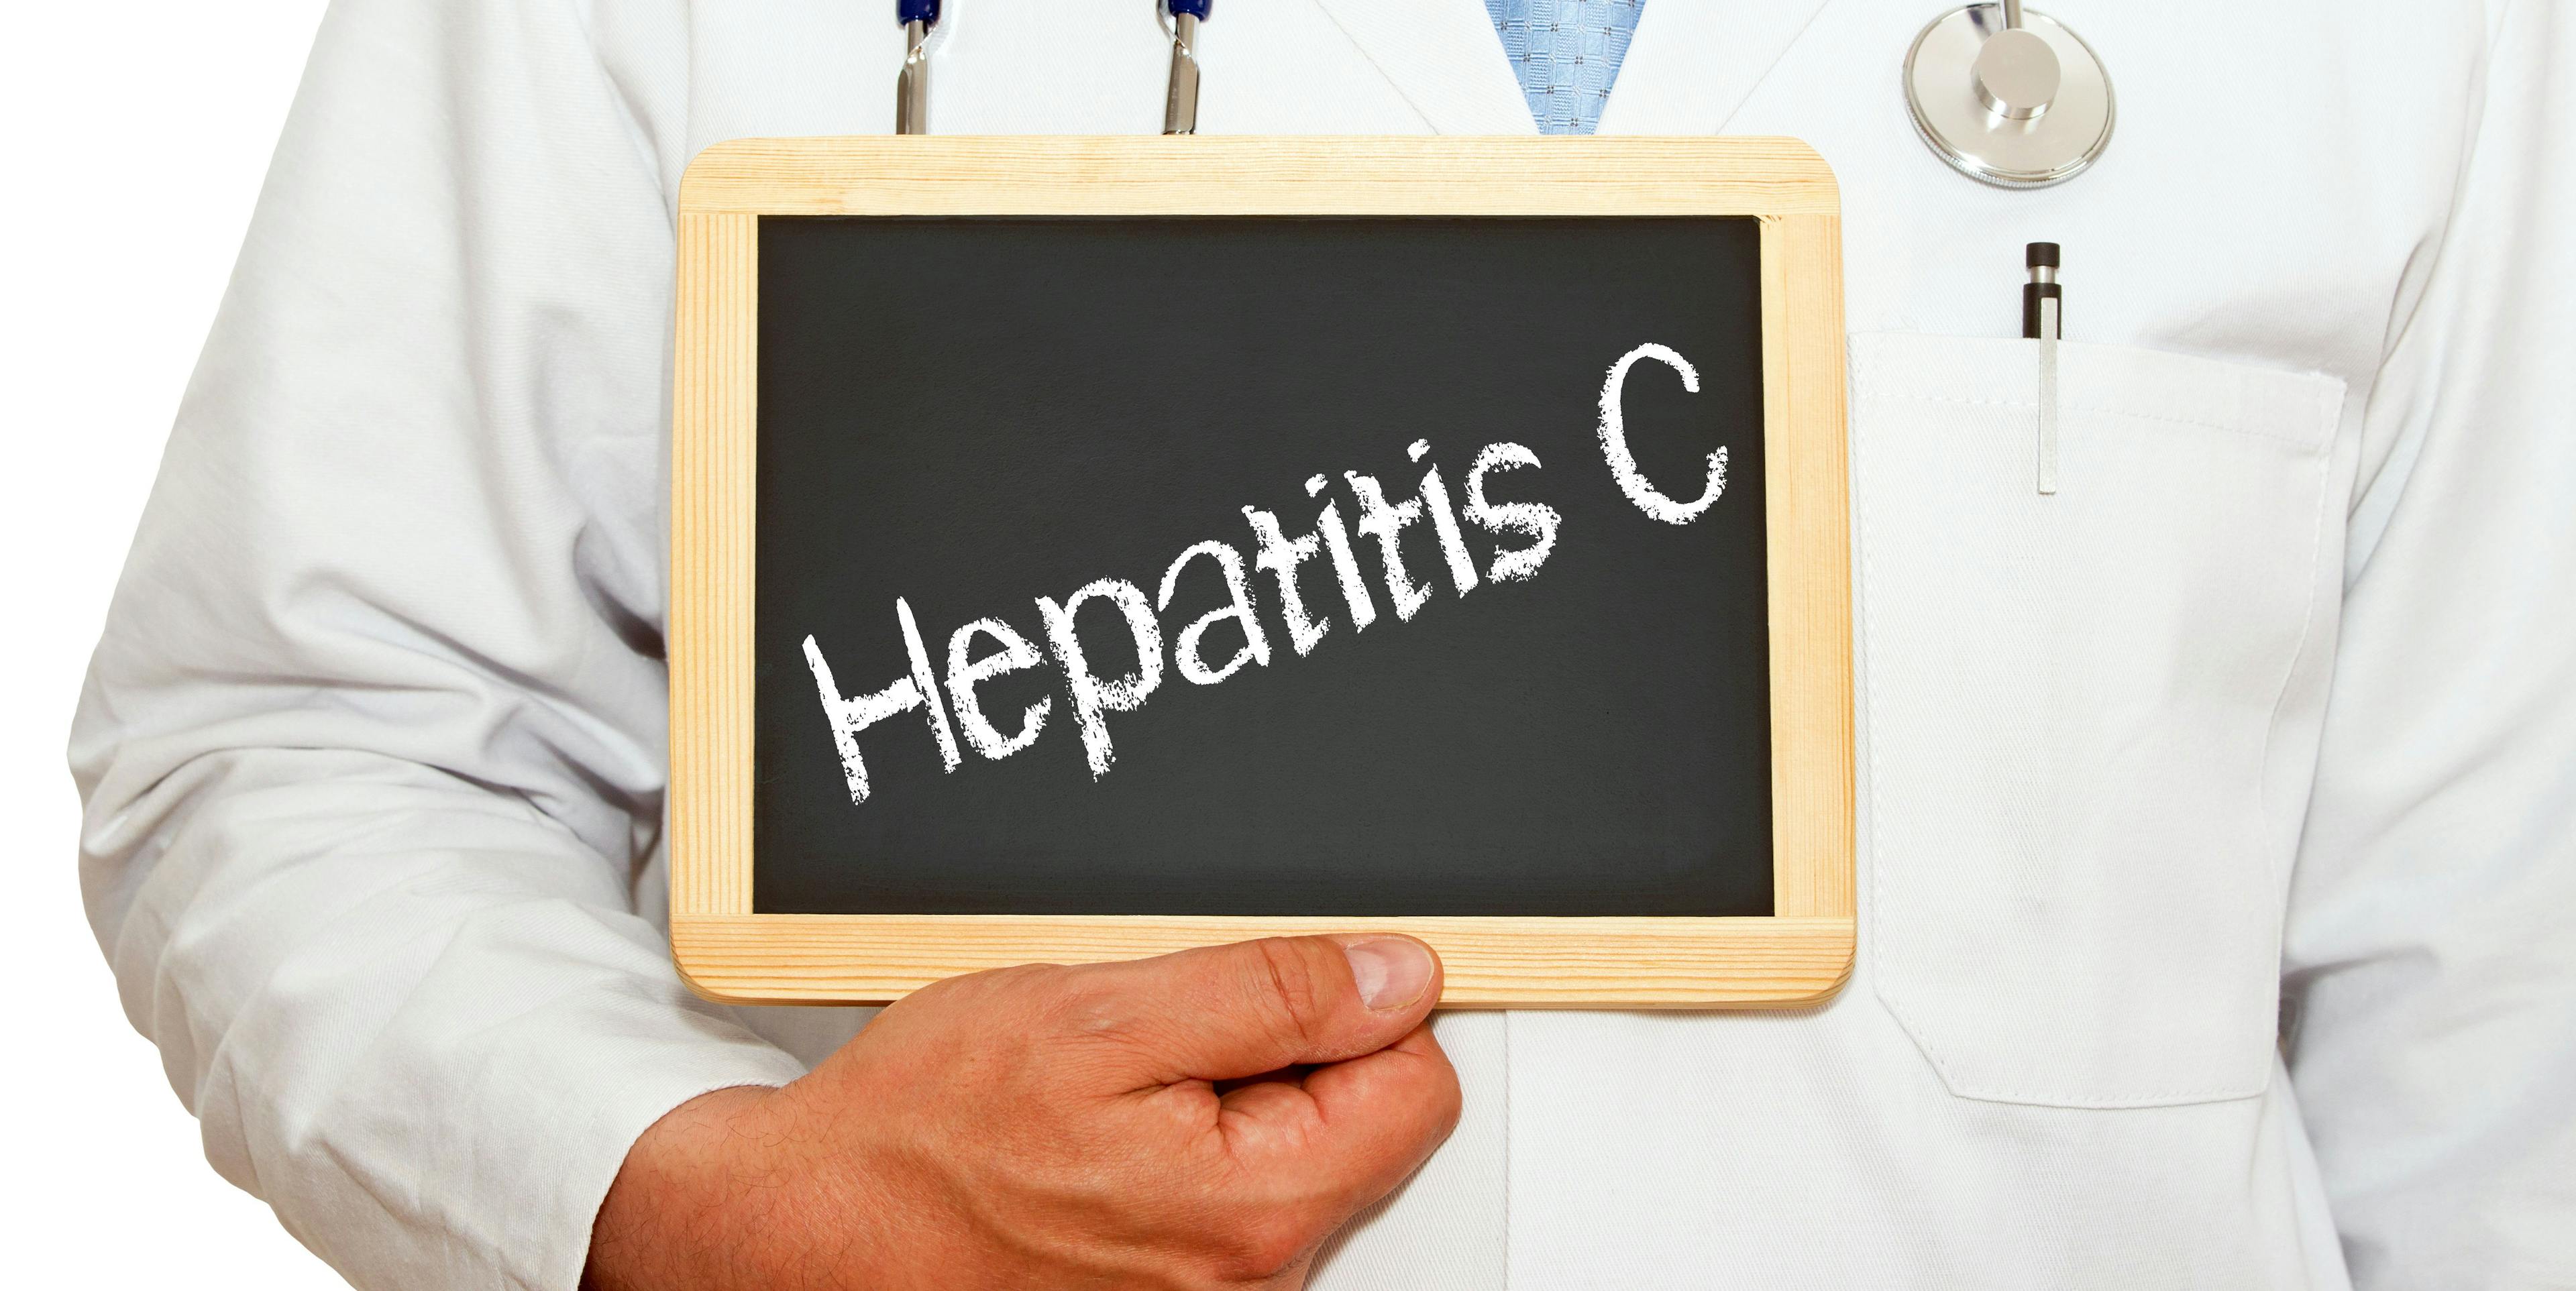 FDA Accepts Combination Hepatitis C Treatment Application for Review